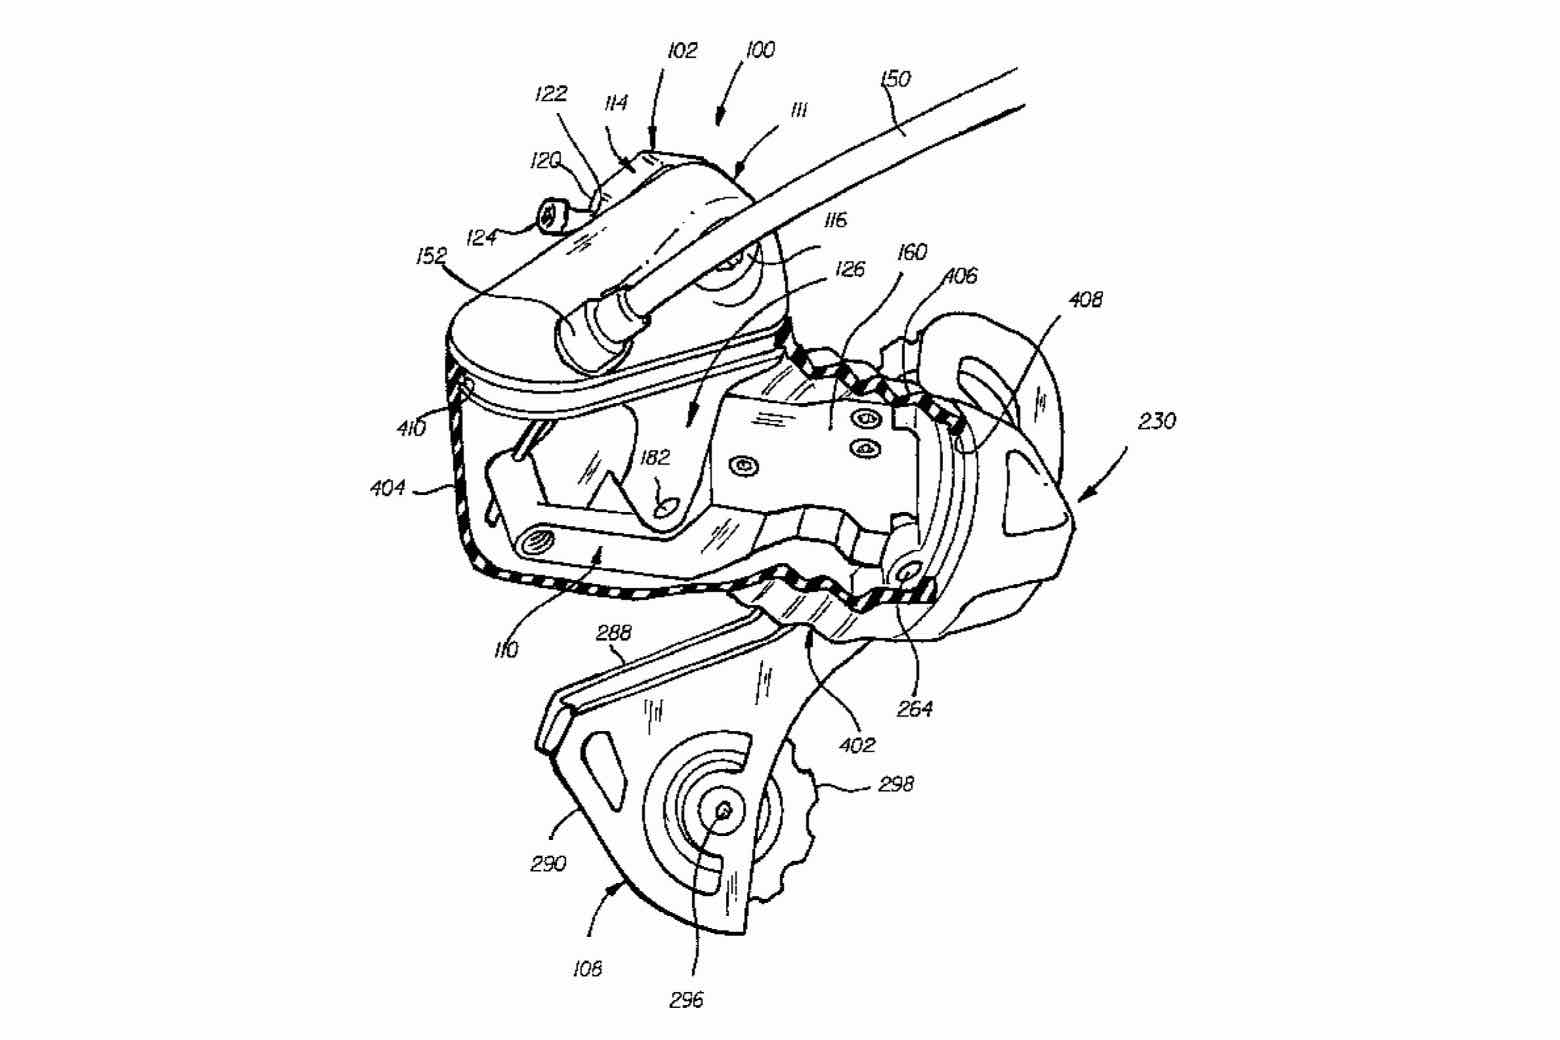 US Patent 6,416,434 - Vivo V2 main image